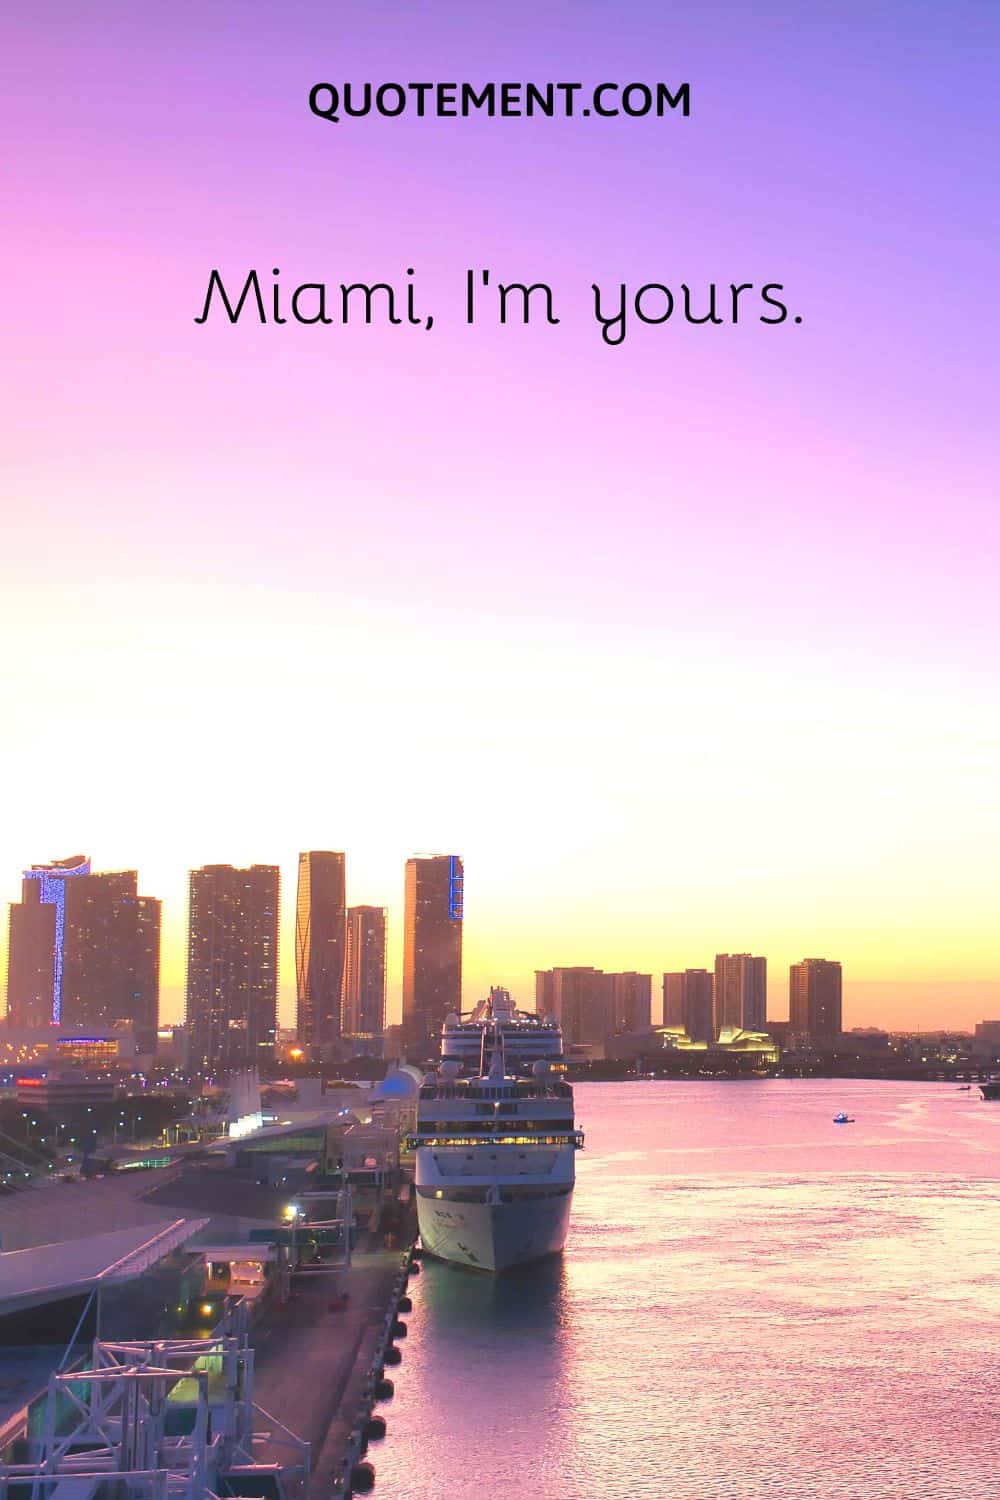 Miami, I’m yours